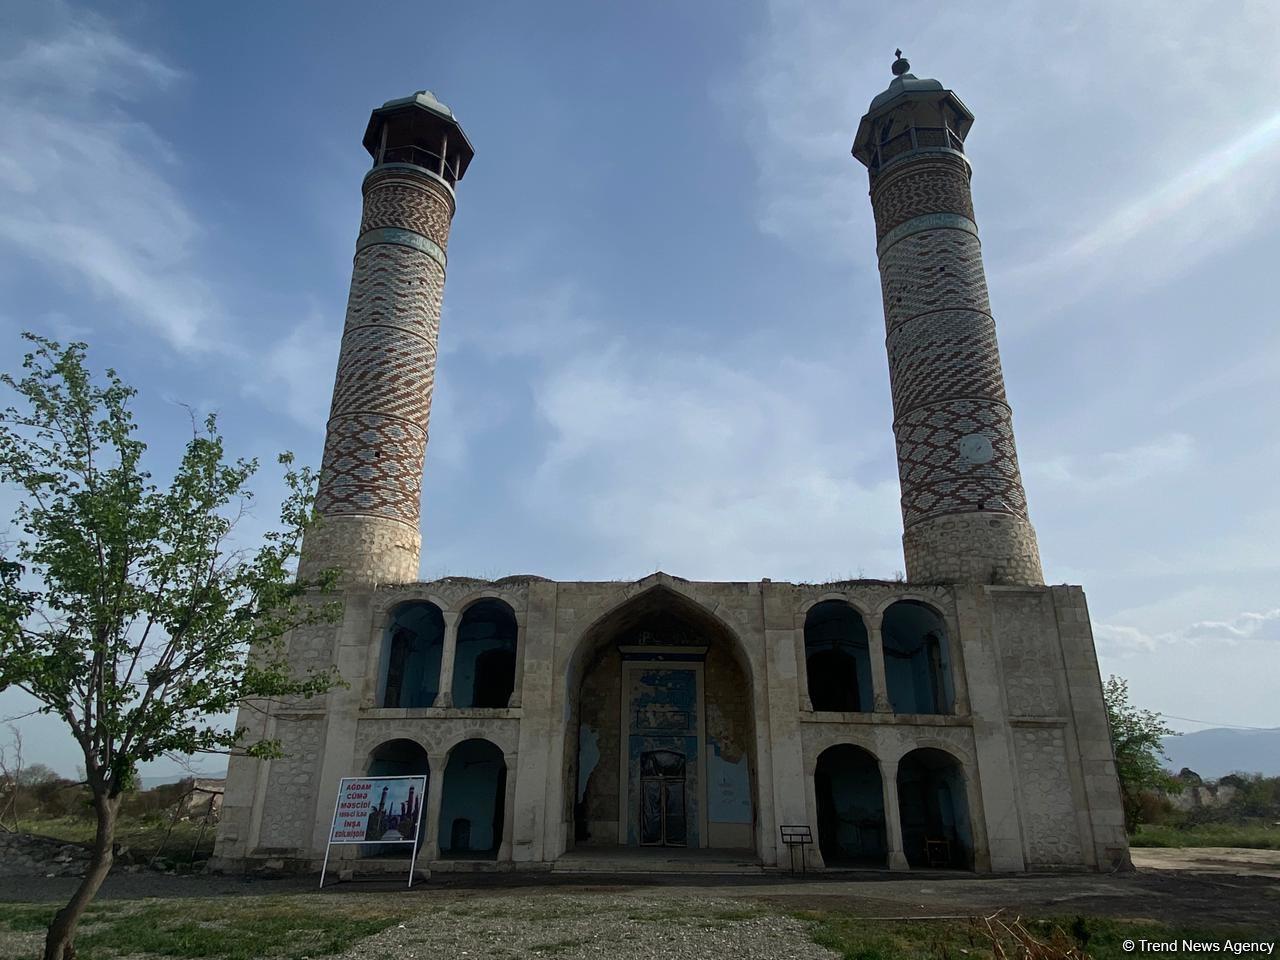 Azerbaijan restores cultural heritage in liberated lands - The Telegraph